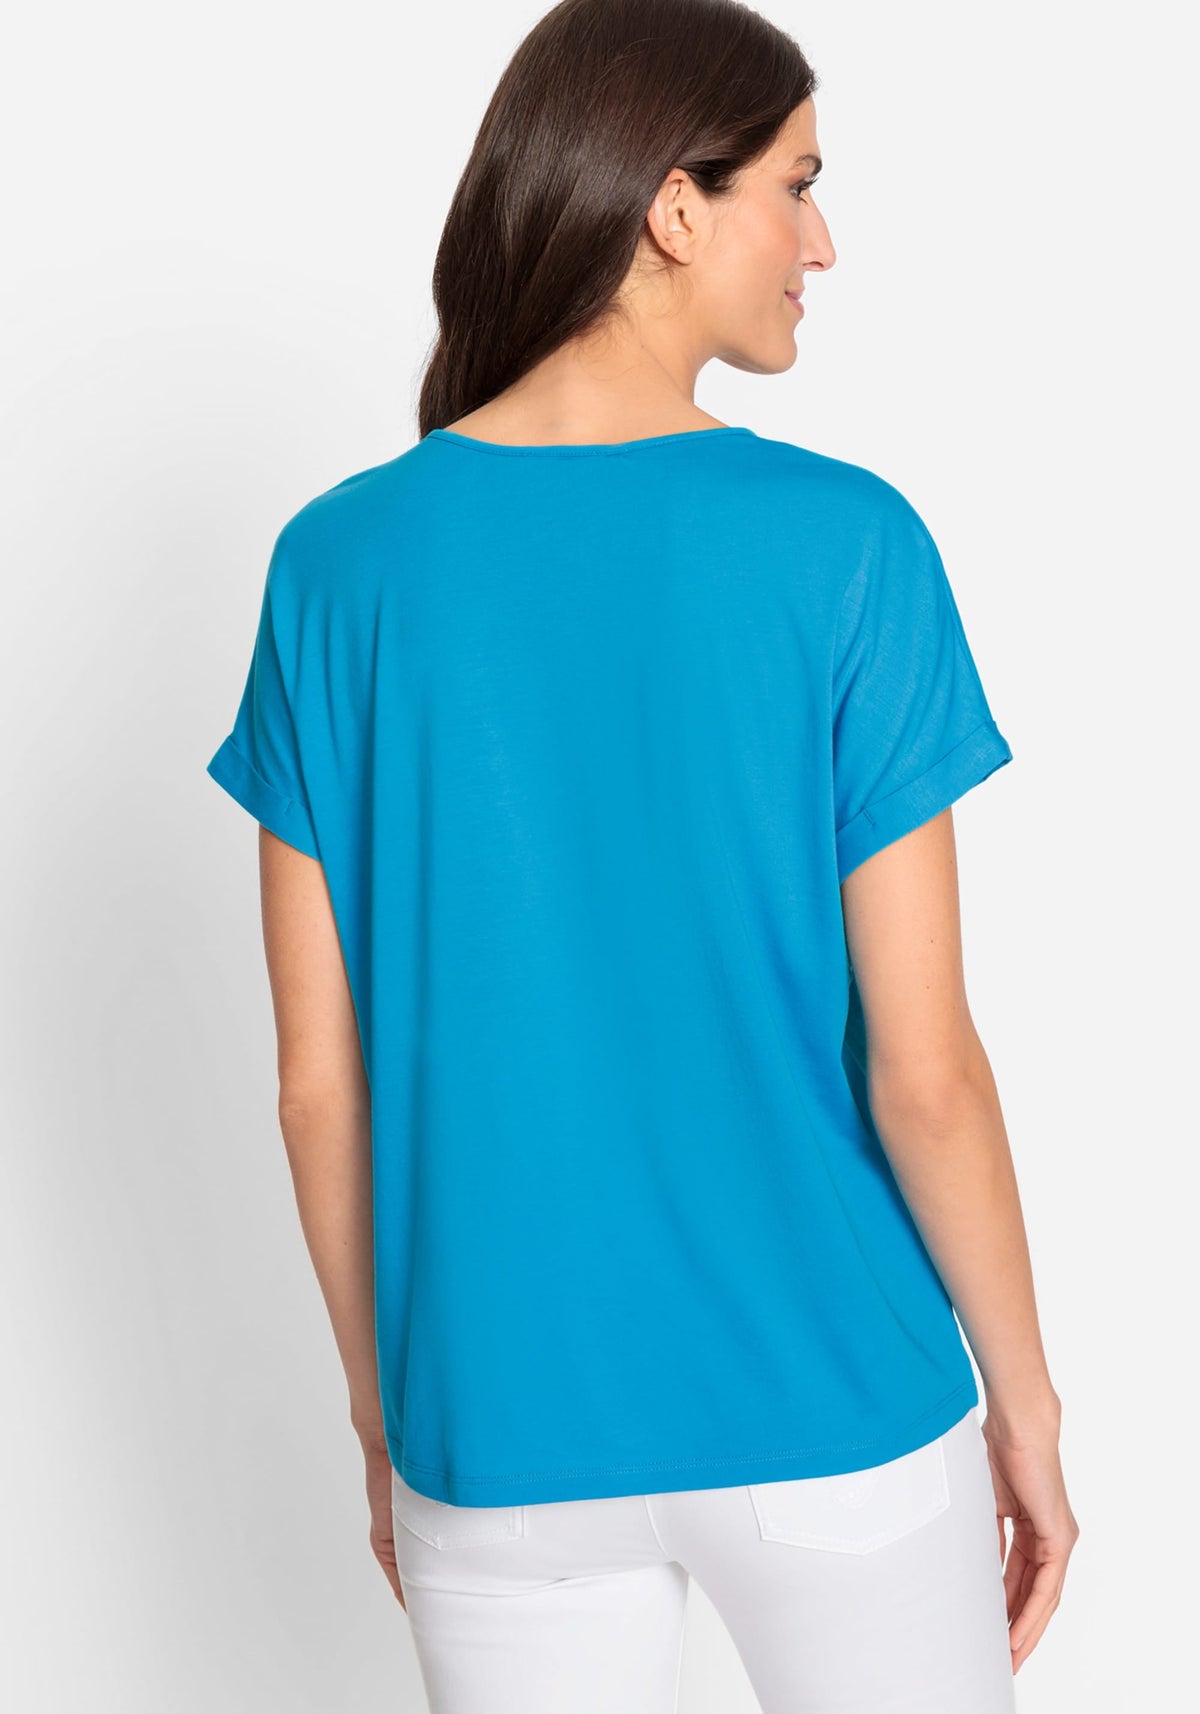 Cotton Linen Short Sleeve Keyhole Neckline T-Shirt containing TENCEL™ Modal